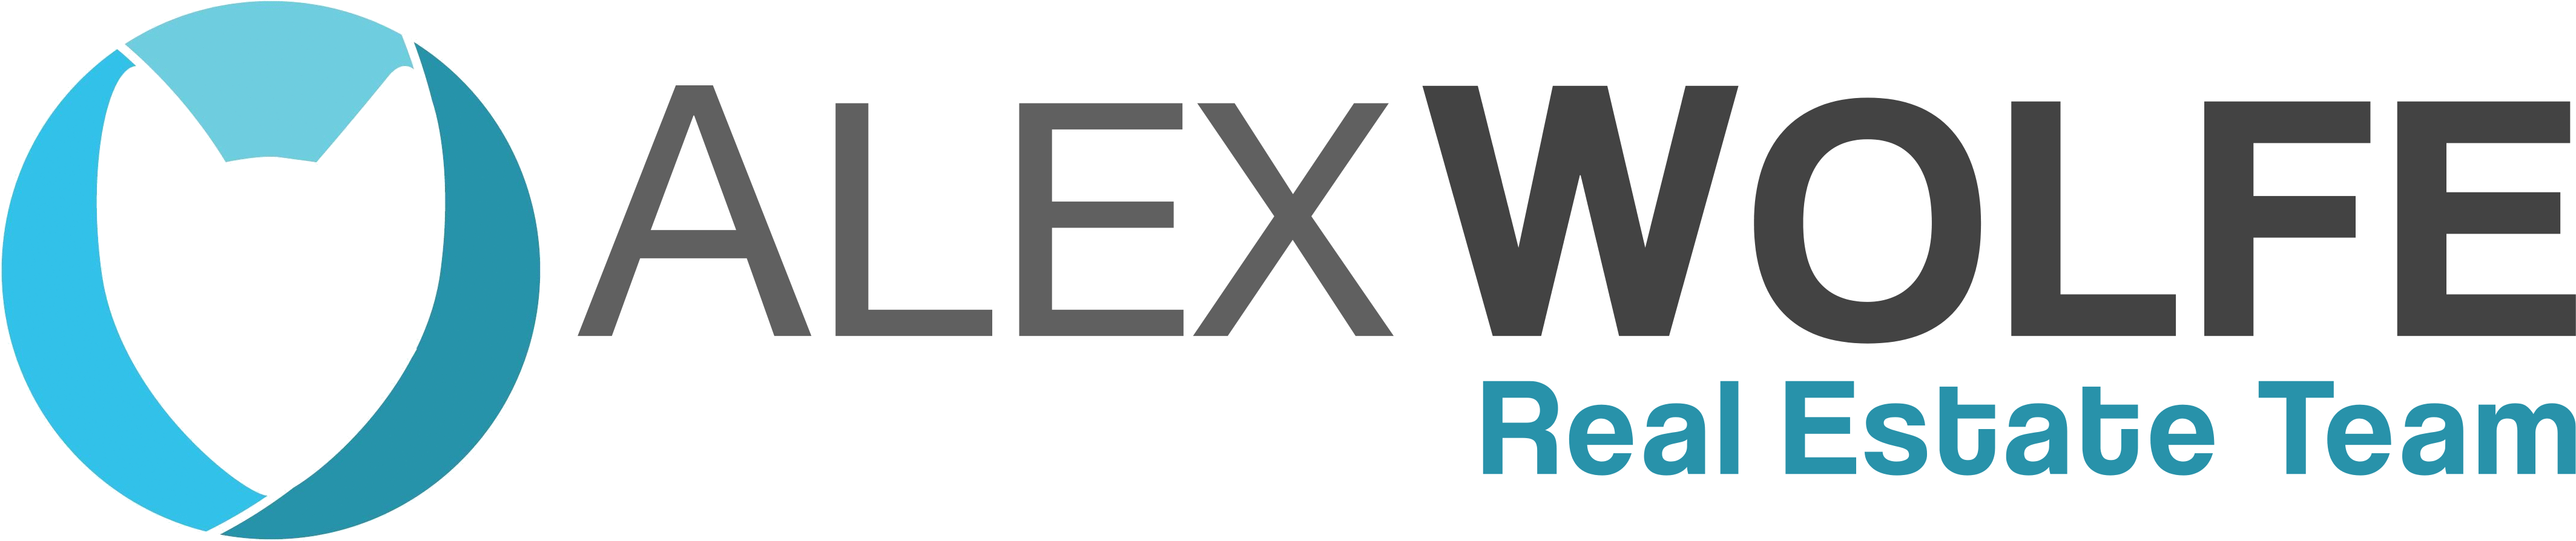 Alex Wolfe Real Estate Group - Alex Wolfe | Ottawa Real Estate Agent | Re/max Affiliates (4281x896)